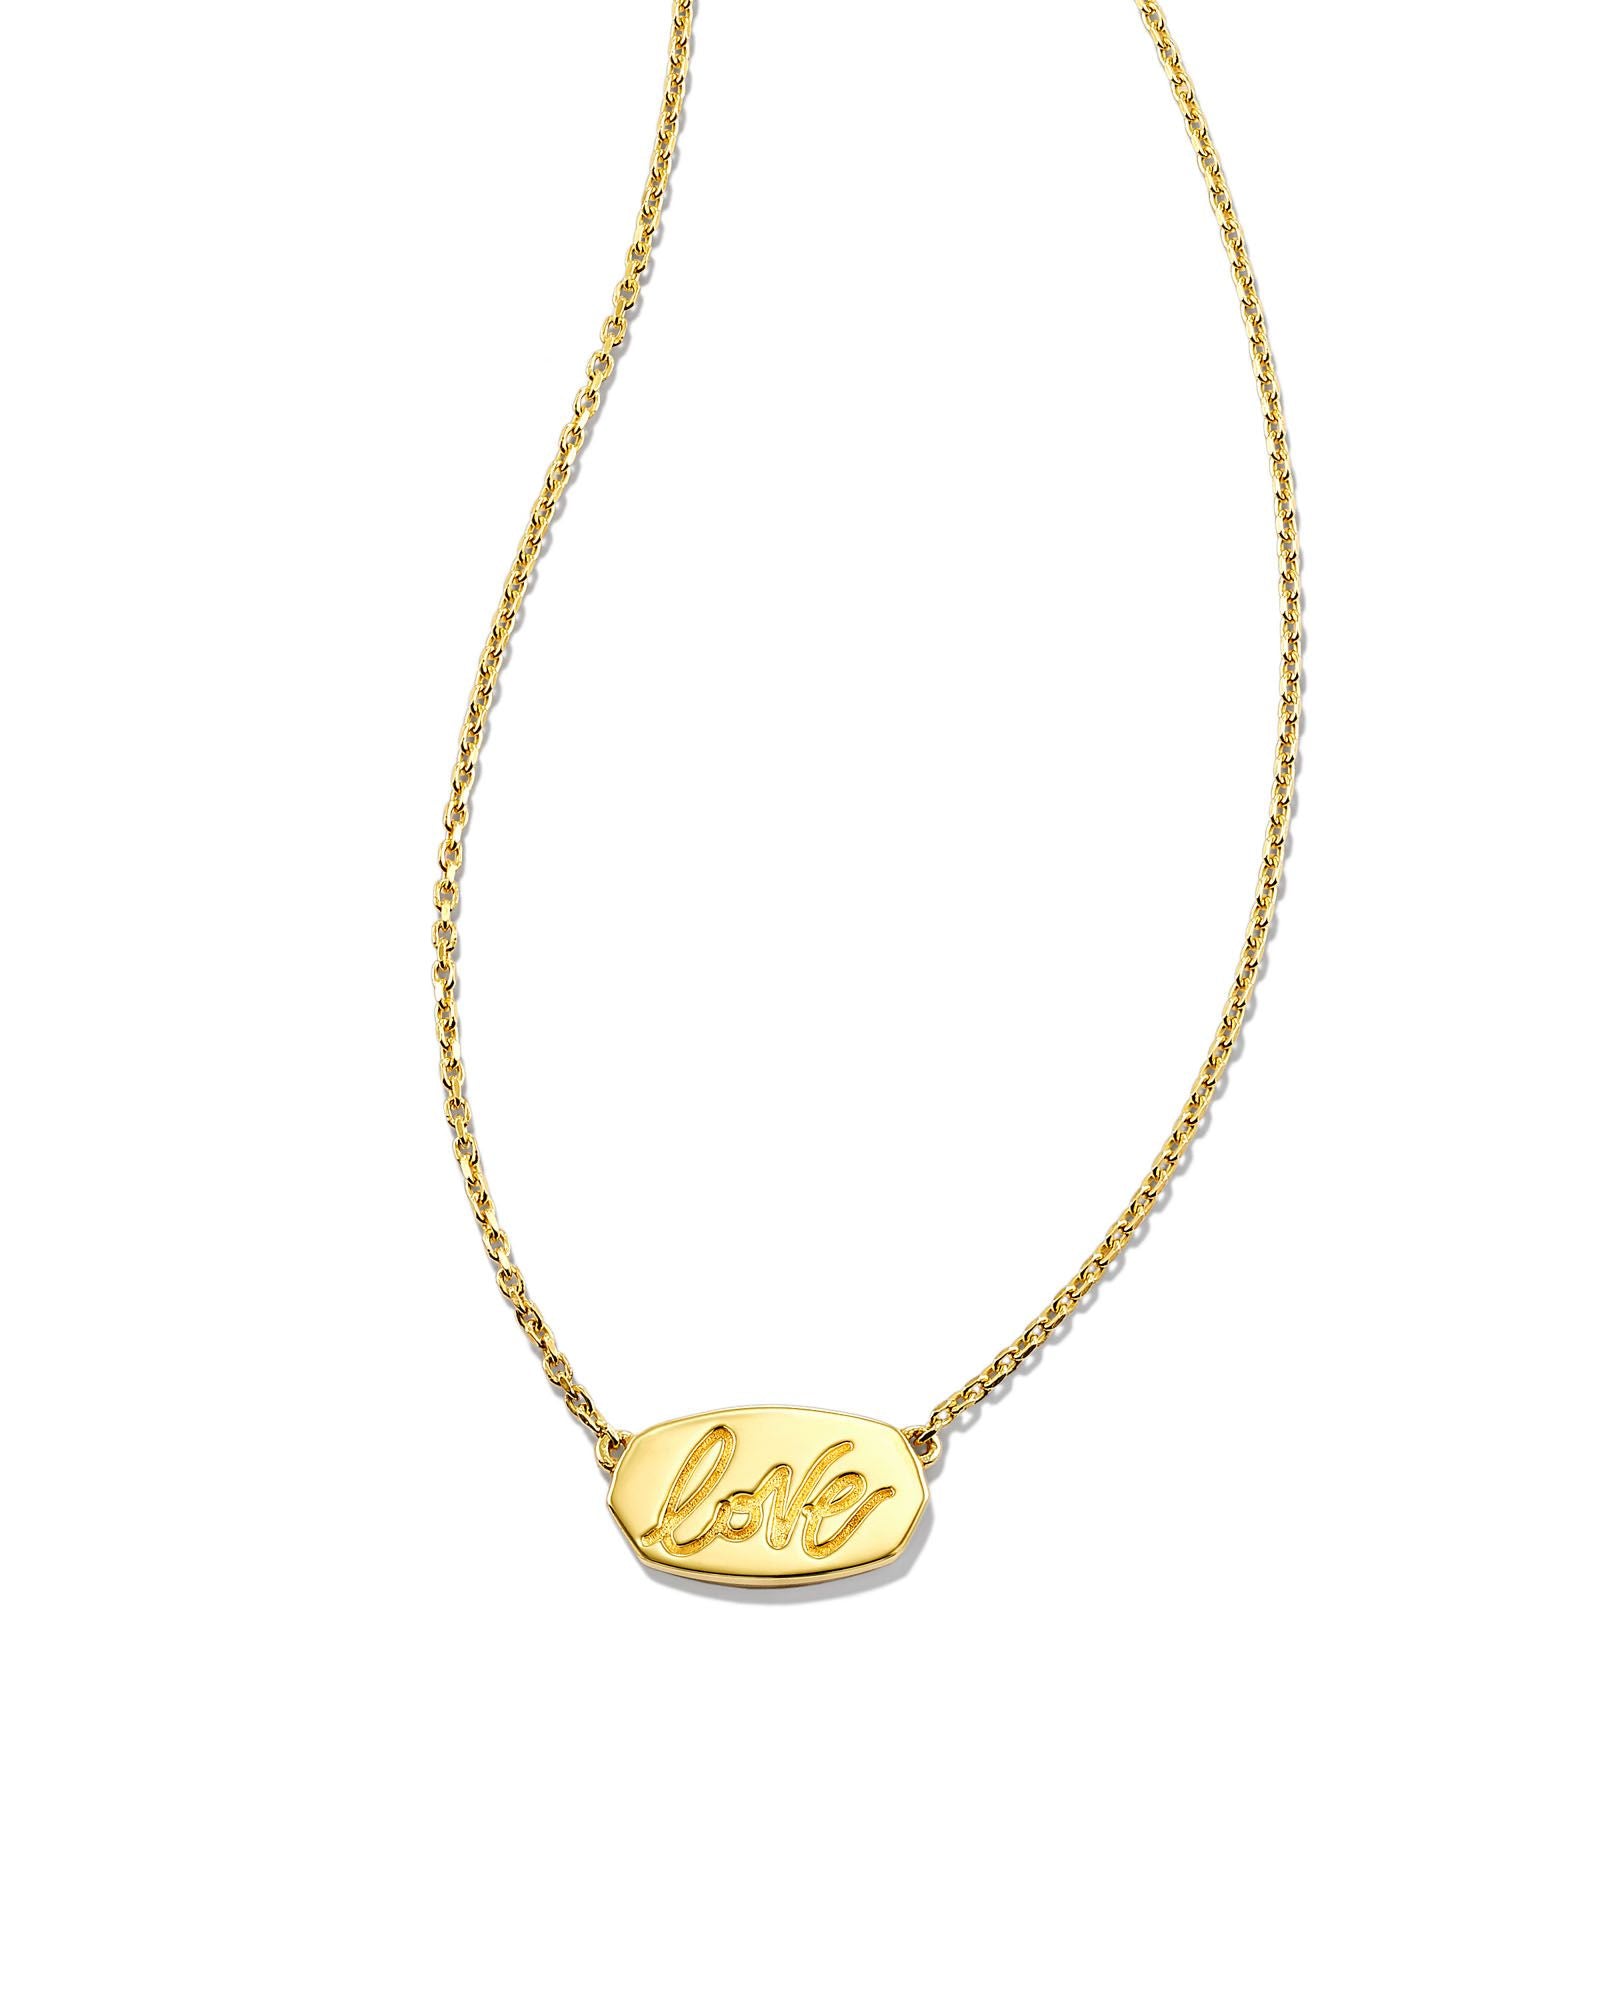 Elisa Curb Chain Necklace in 18k Gold Vermeil | Kendra Scott